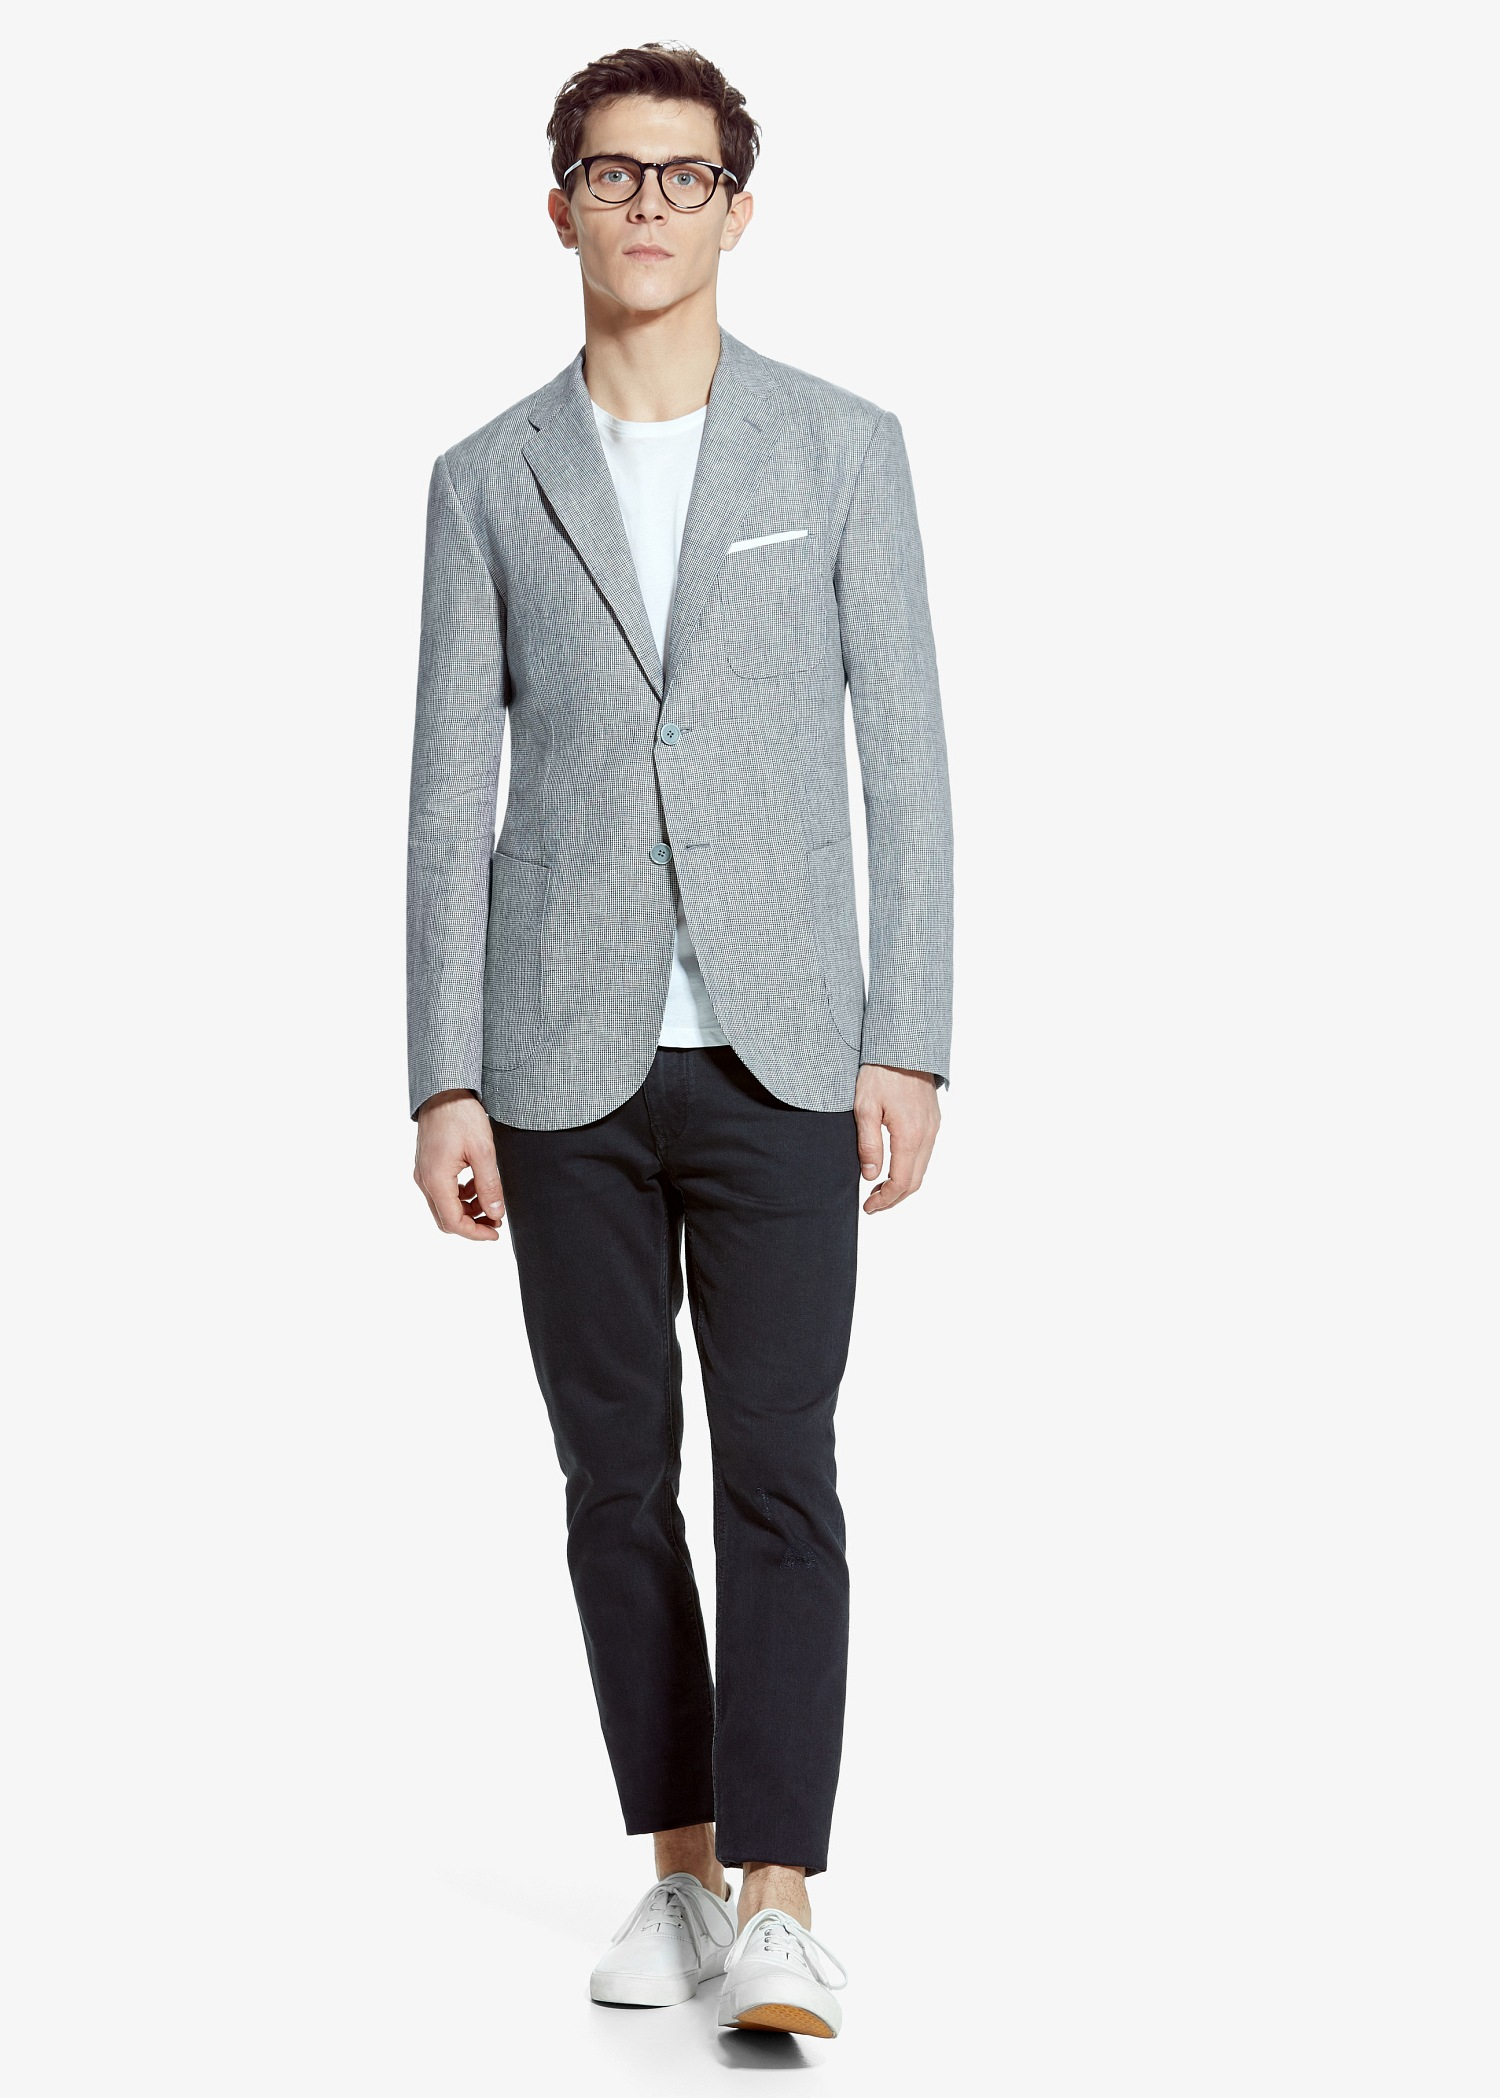 Lyst - Mango Houndstooth Linen Blazer in Gray for Men